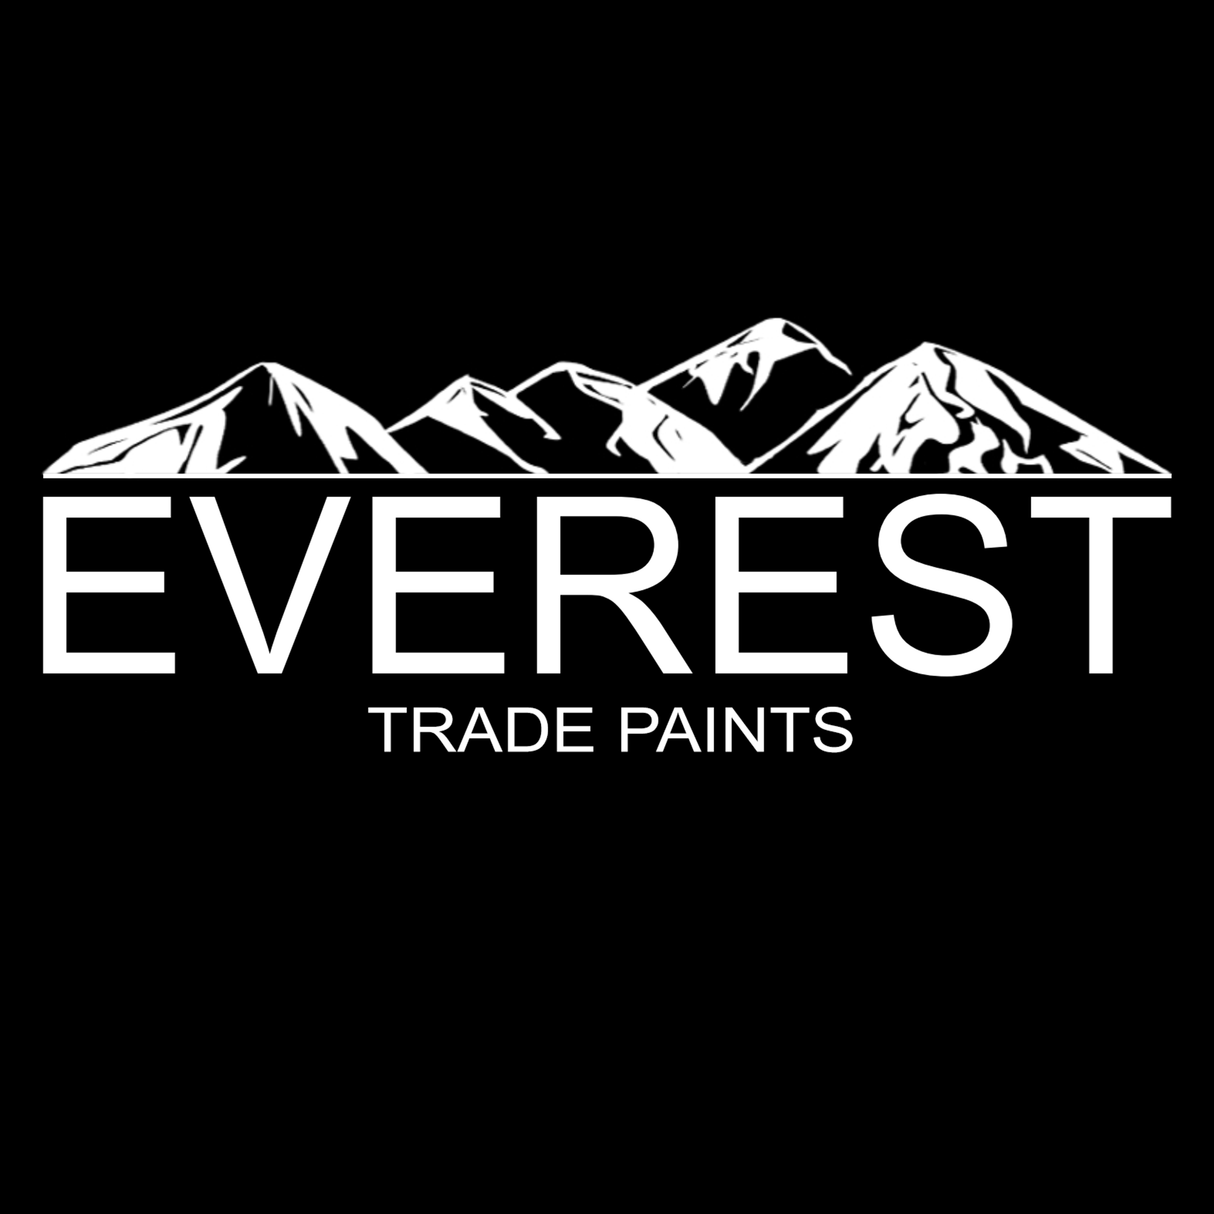 Everest Trade - Ultimate Skip & Container Paint - Anti-Corrosive - Machine Enamel - Oxide Gloss - PremiumPaints